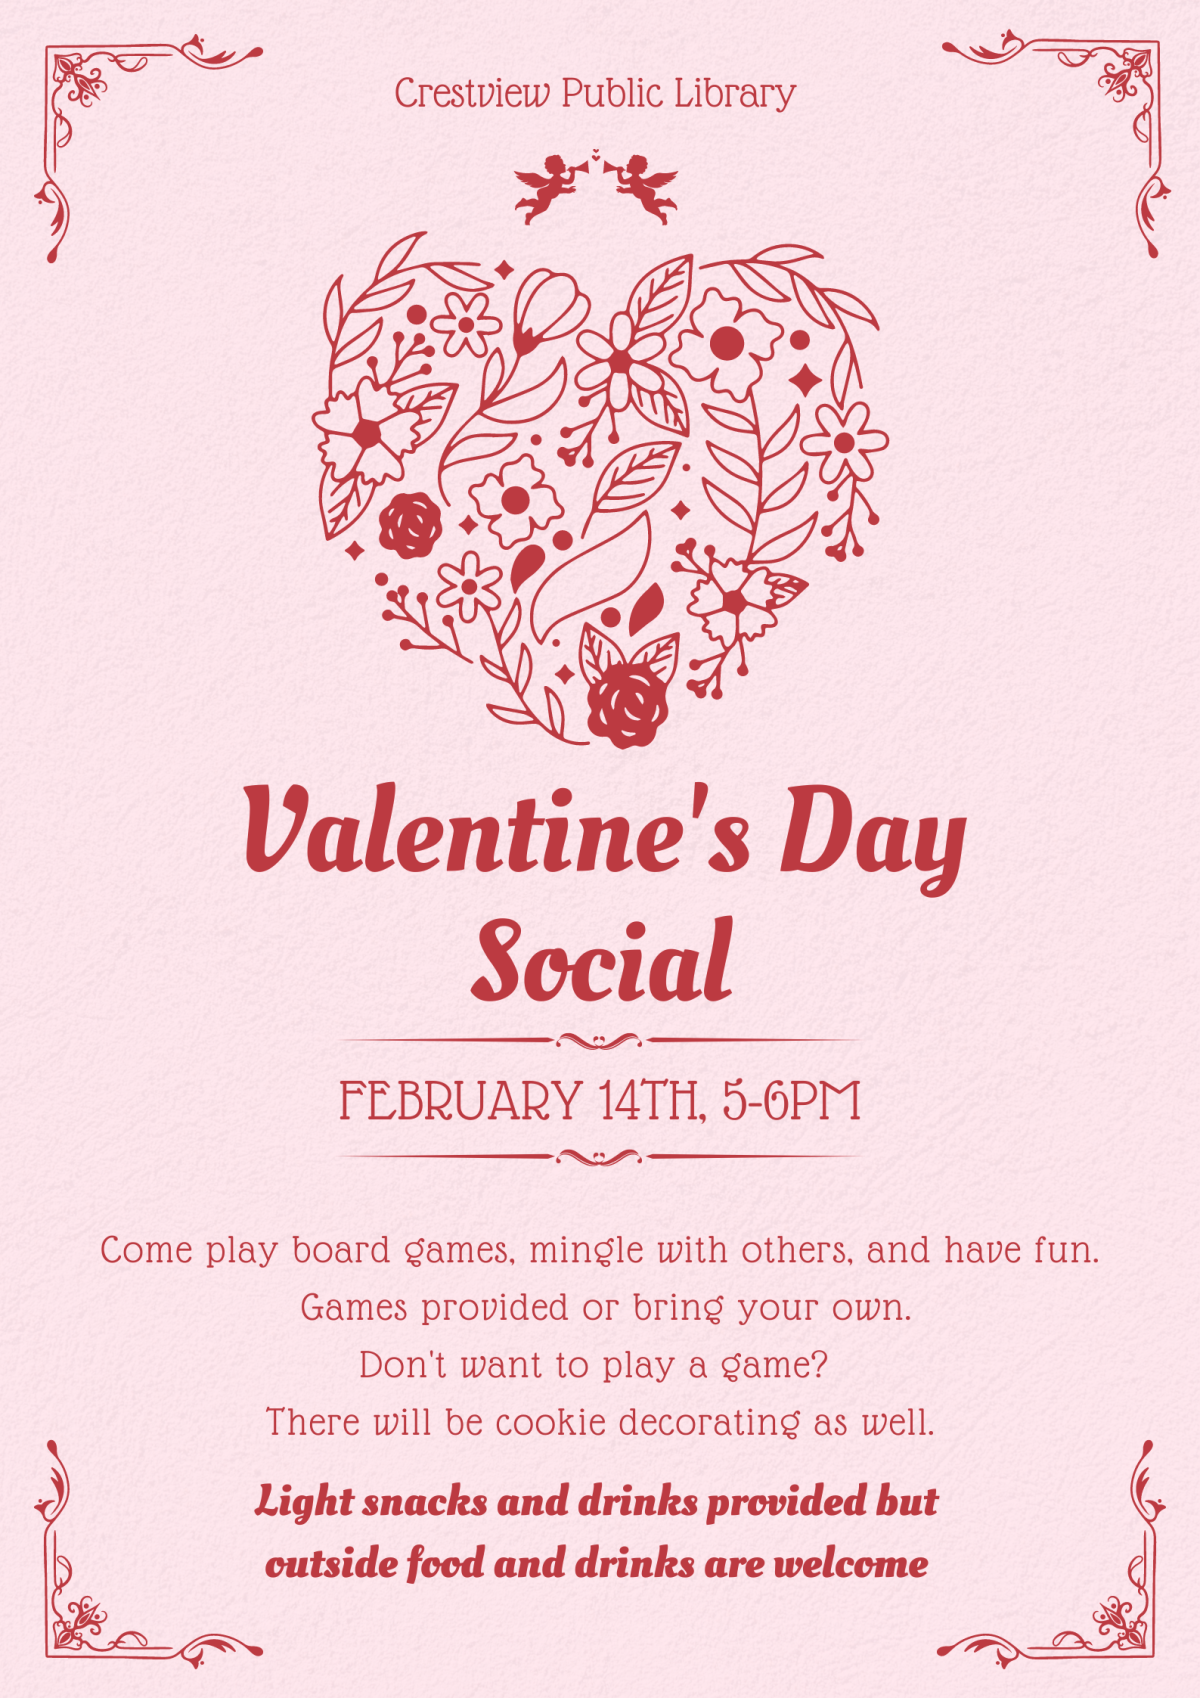 Valentine's event flyer